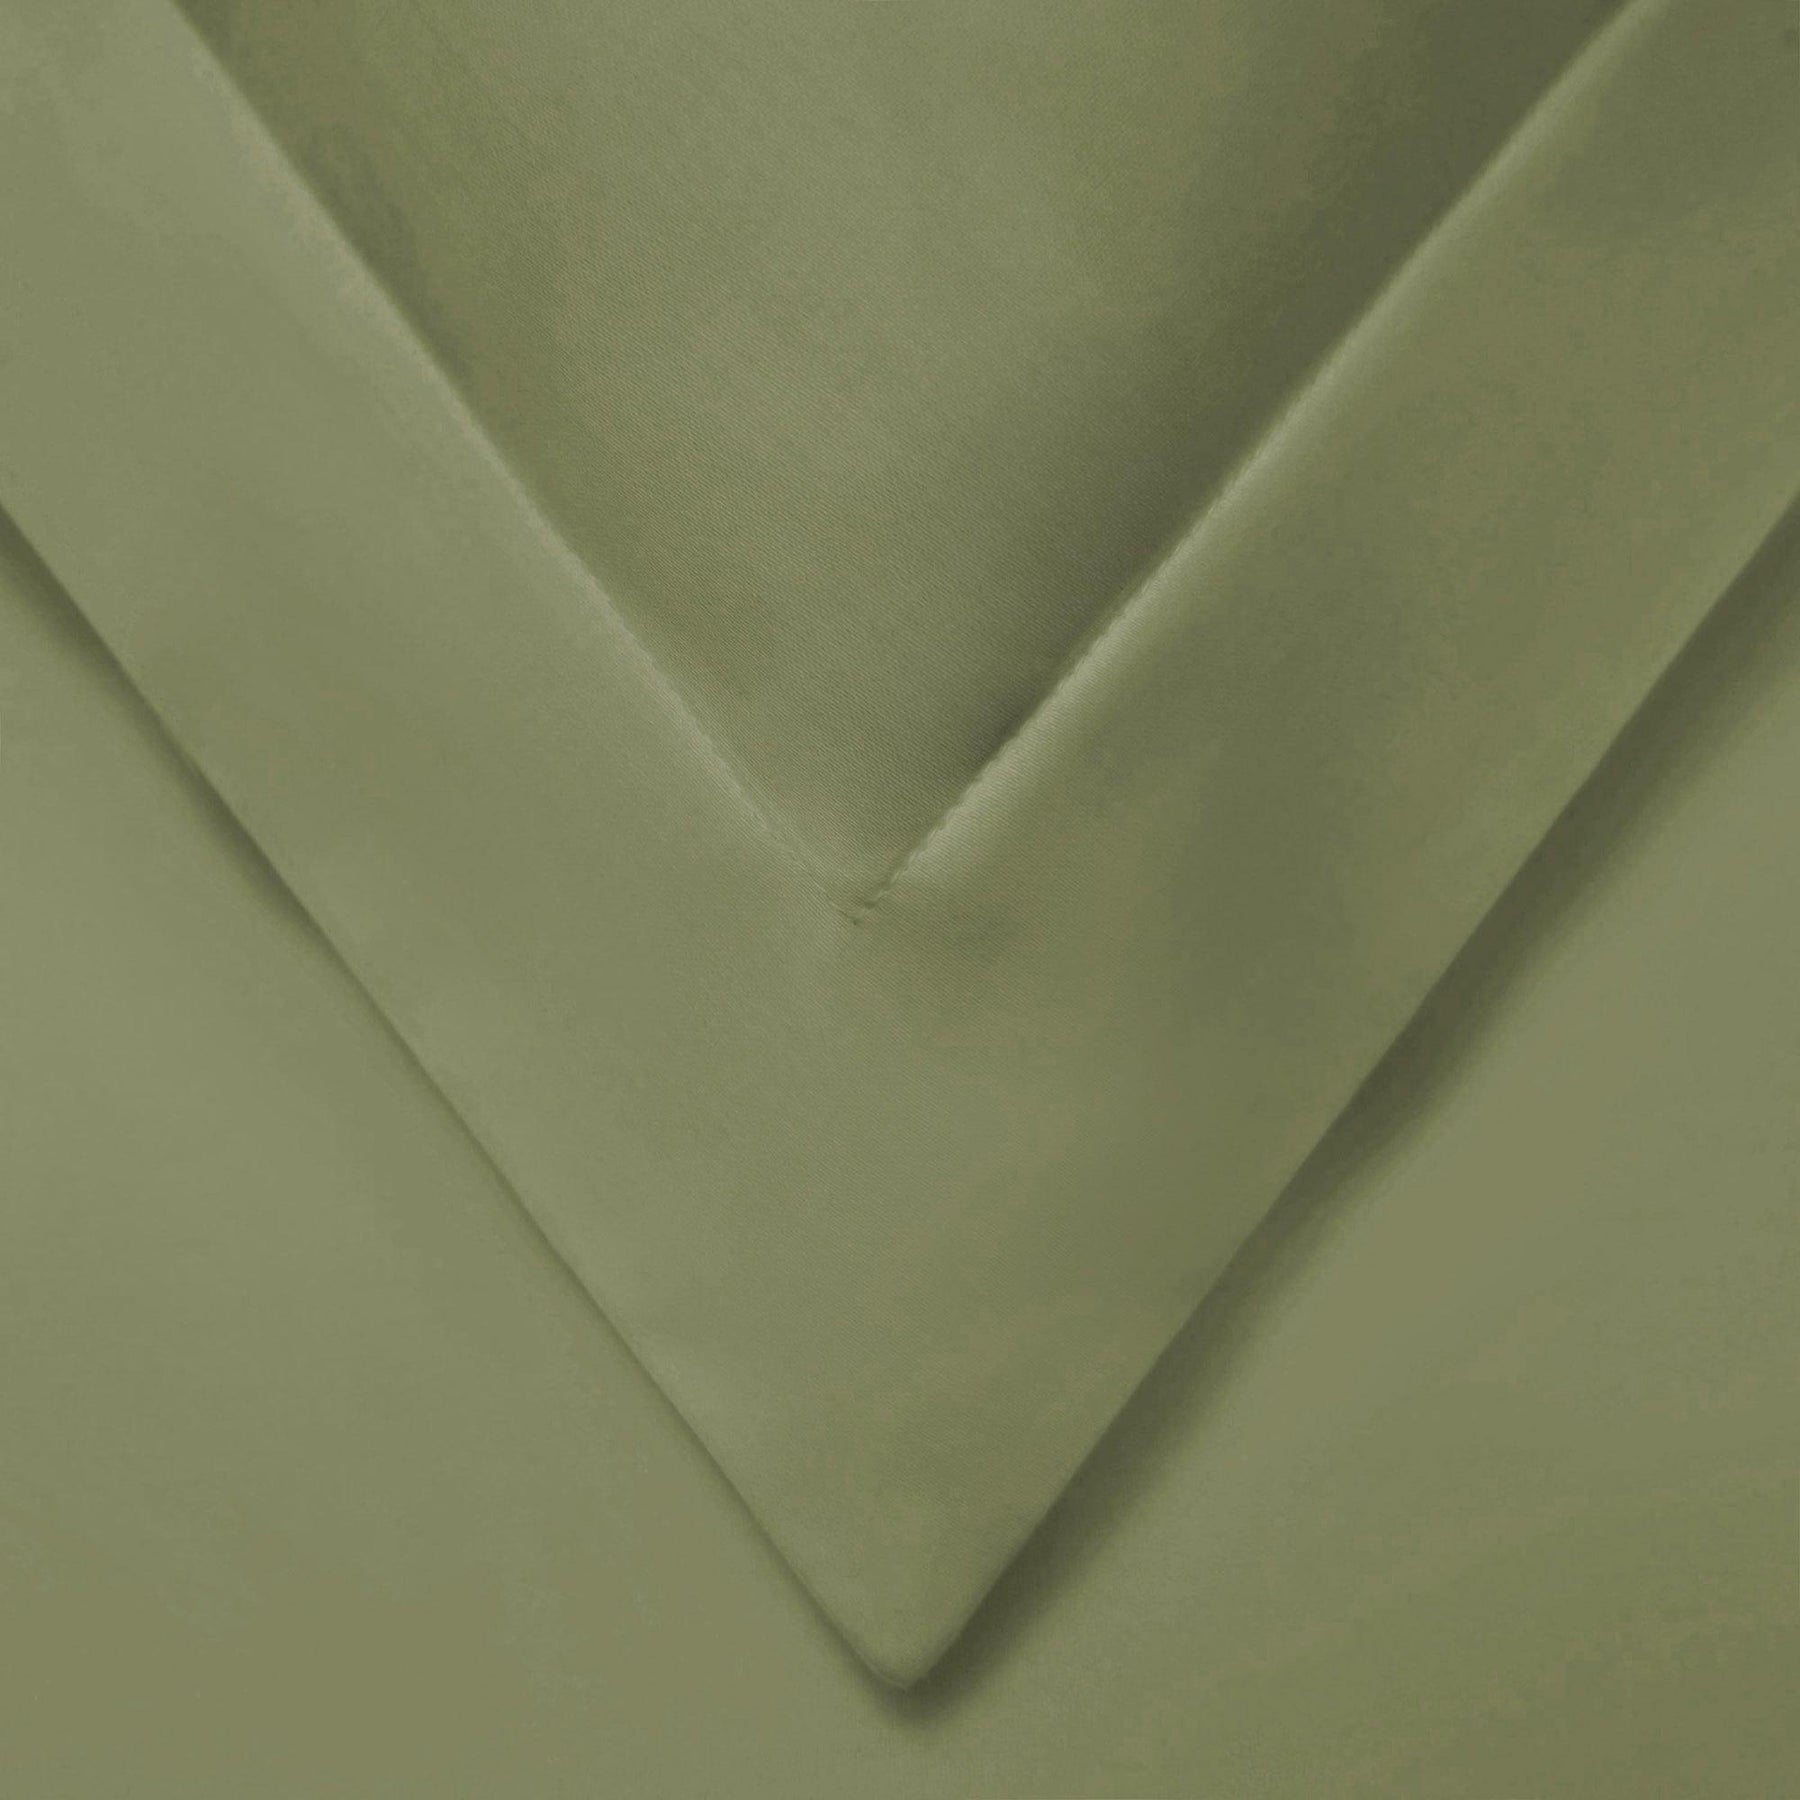  Superior Solid Cotton Blend Duvet Cover Set - Sage